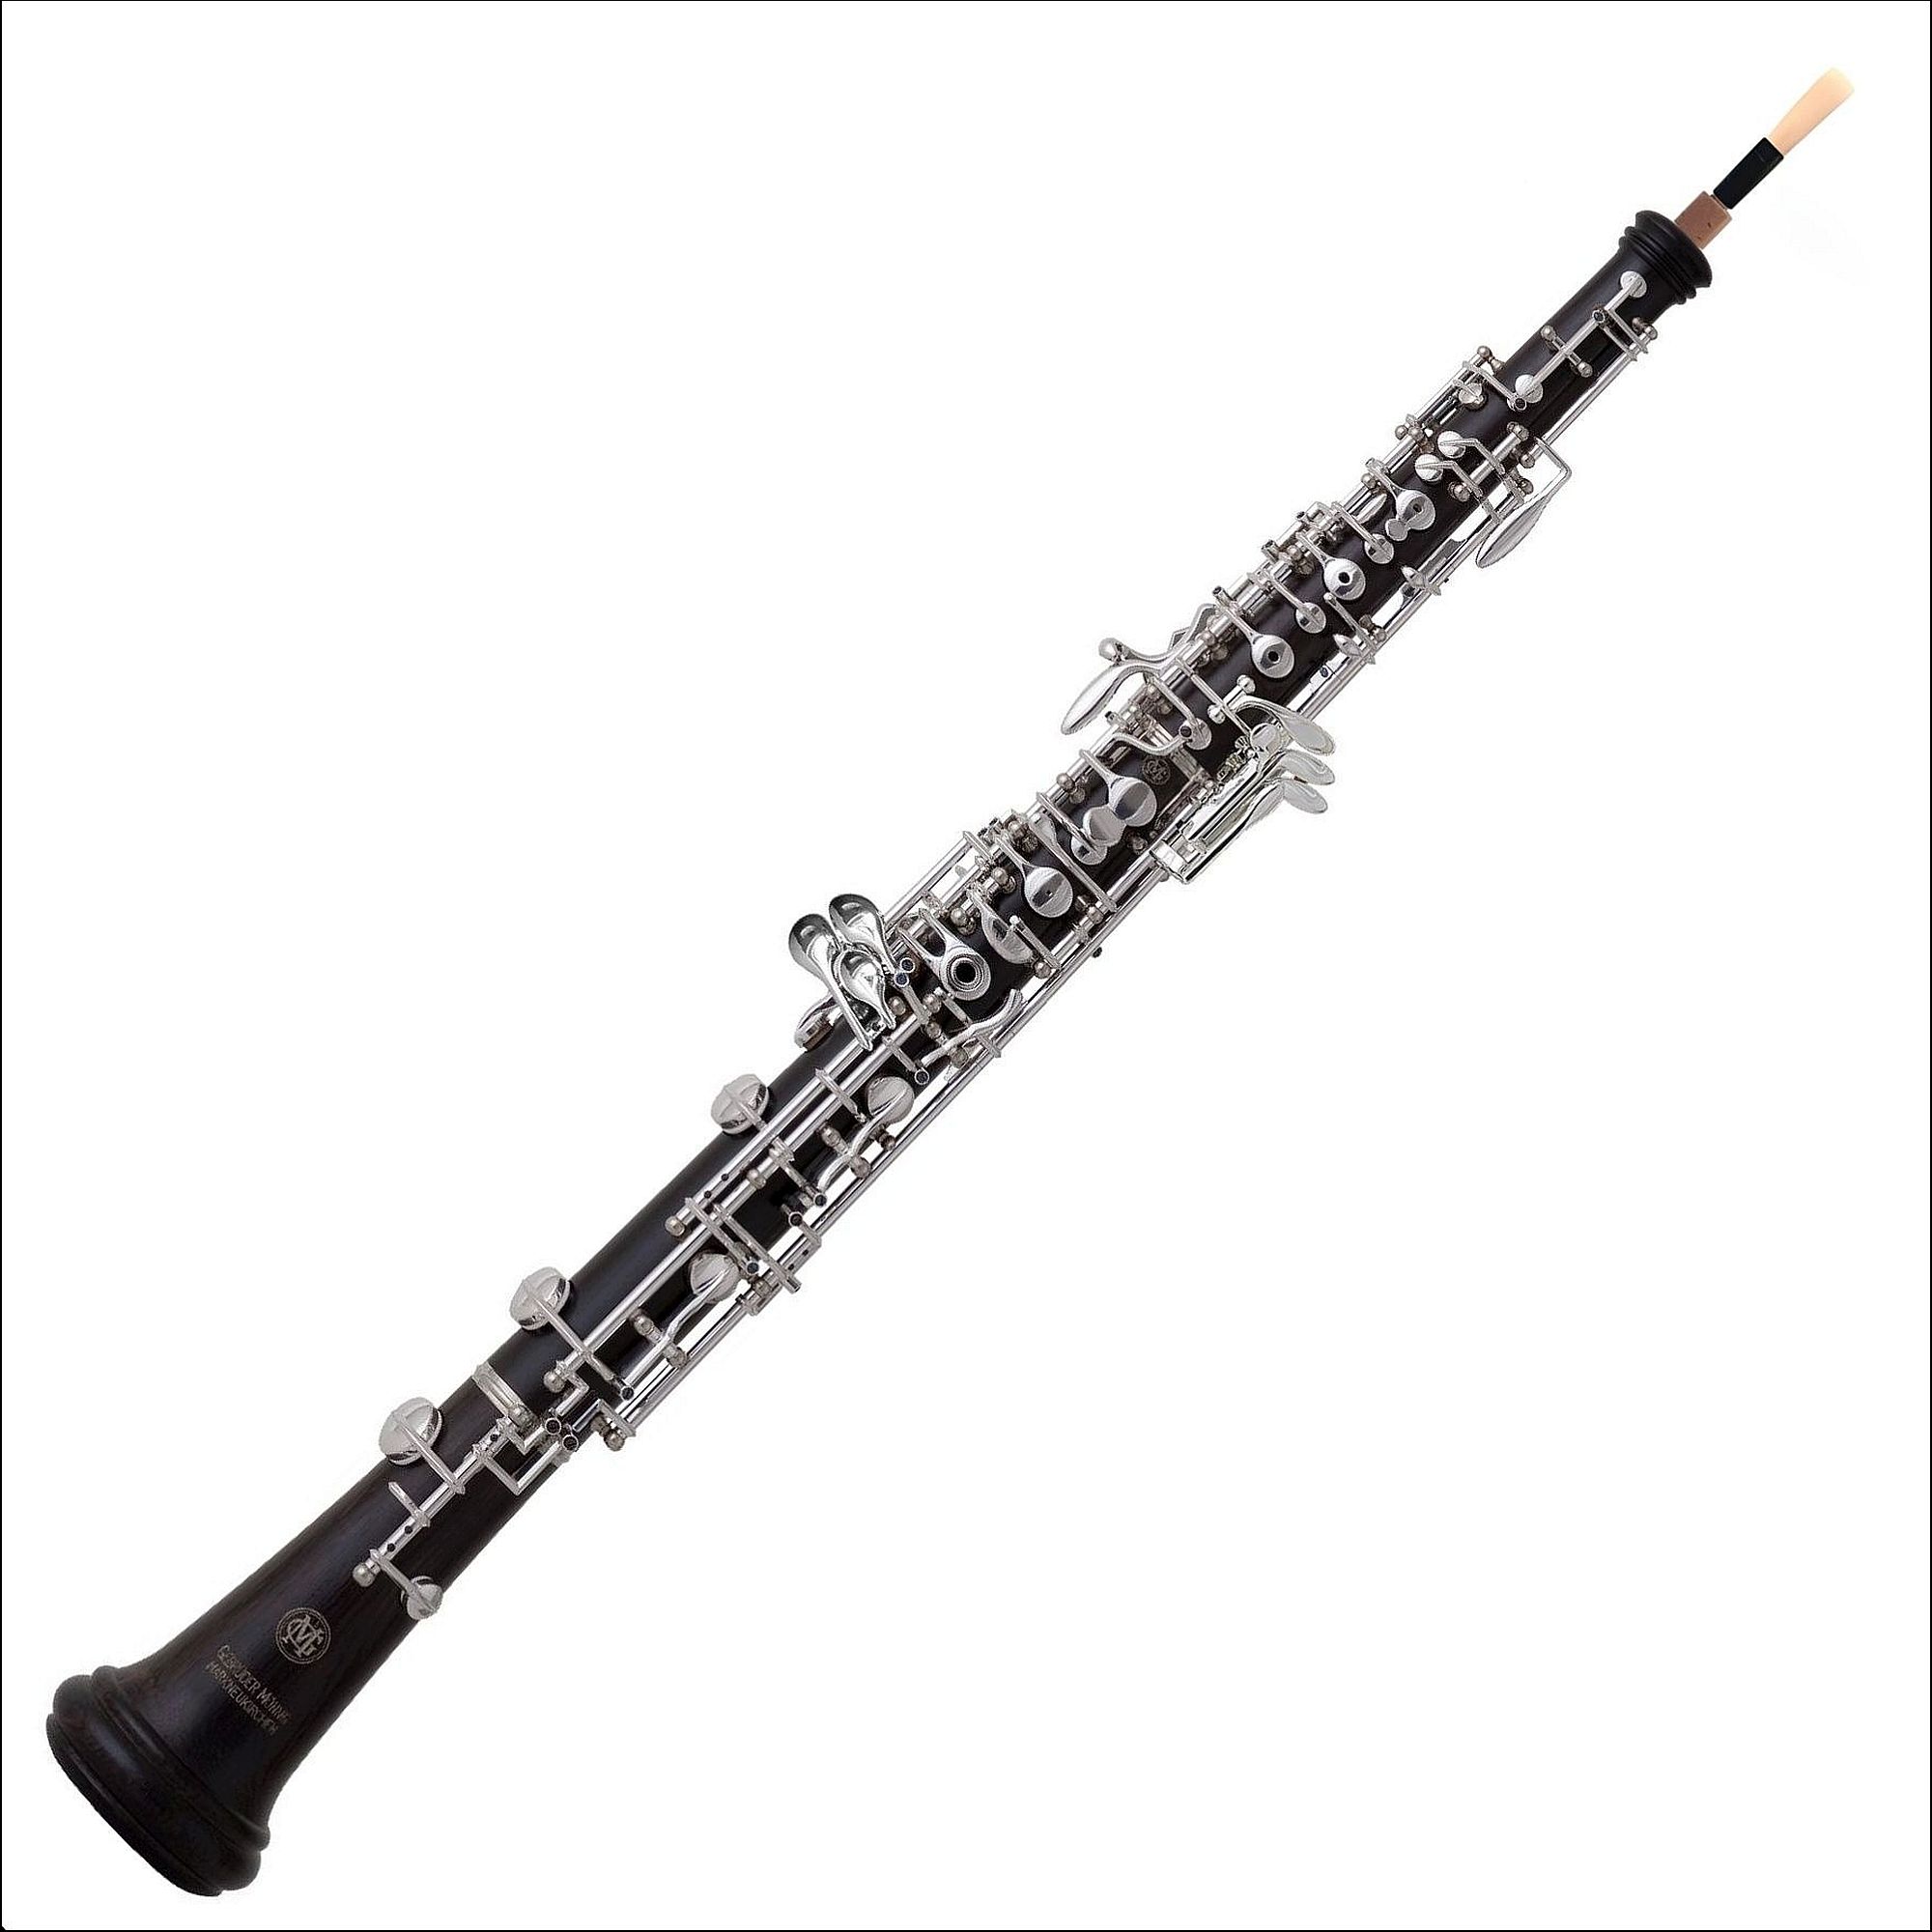 Oboe - Wikipedia, la enciclopedia libre